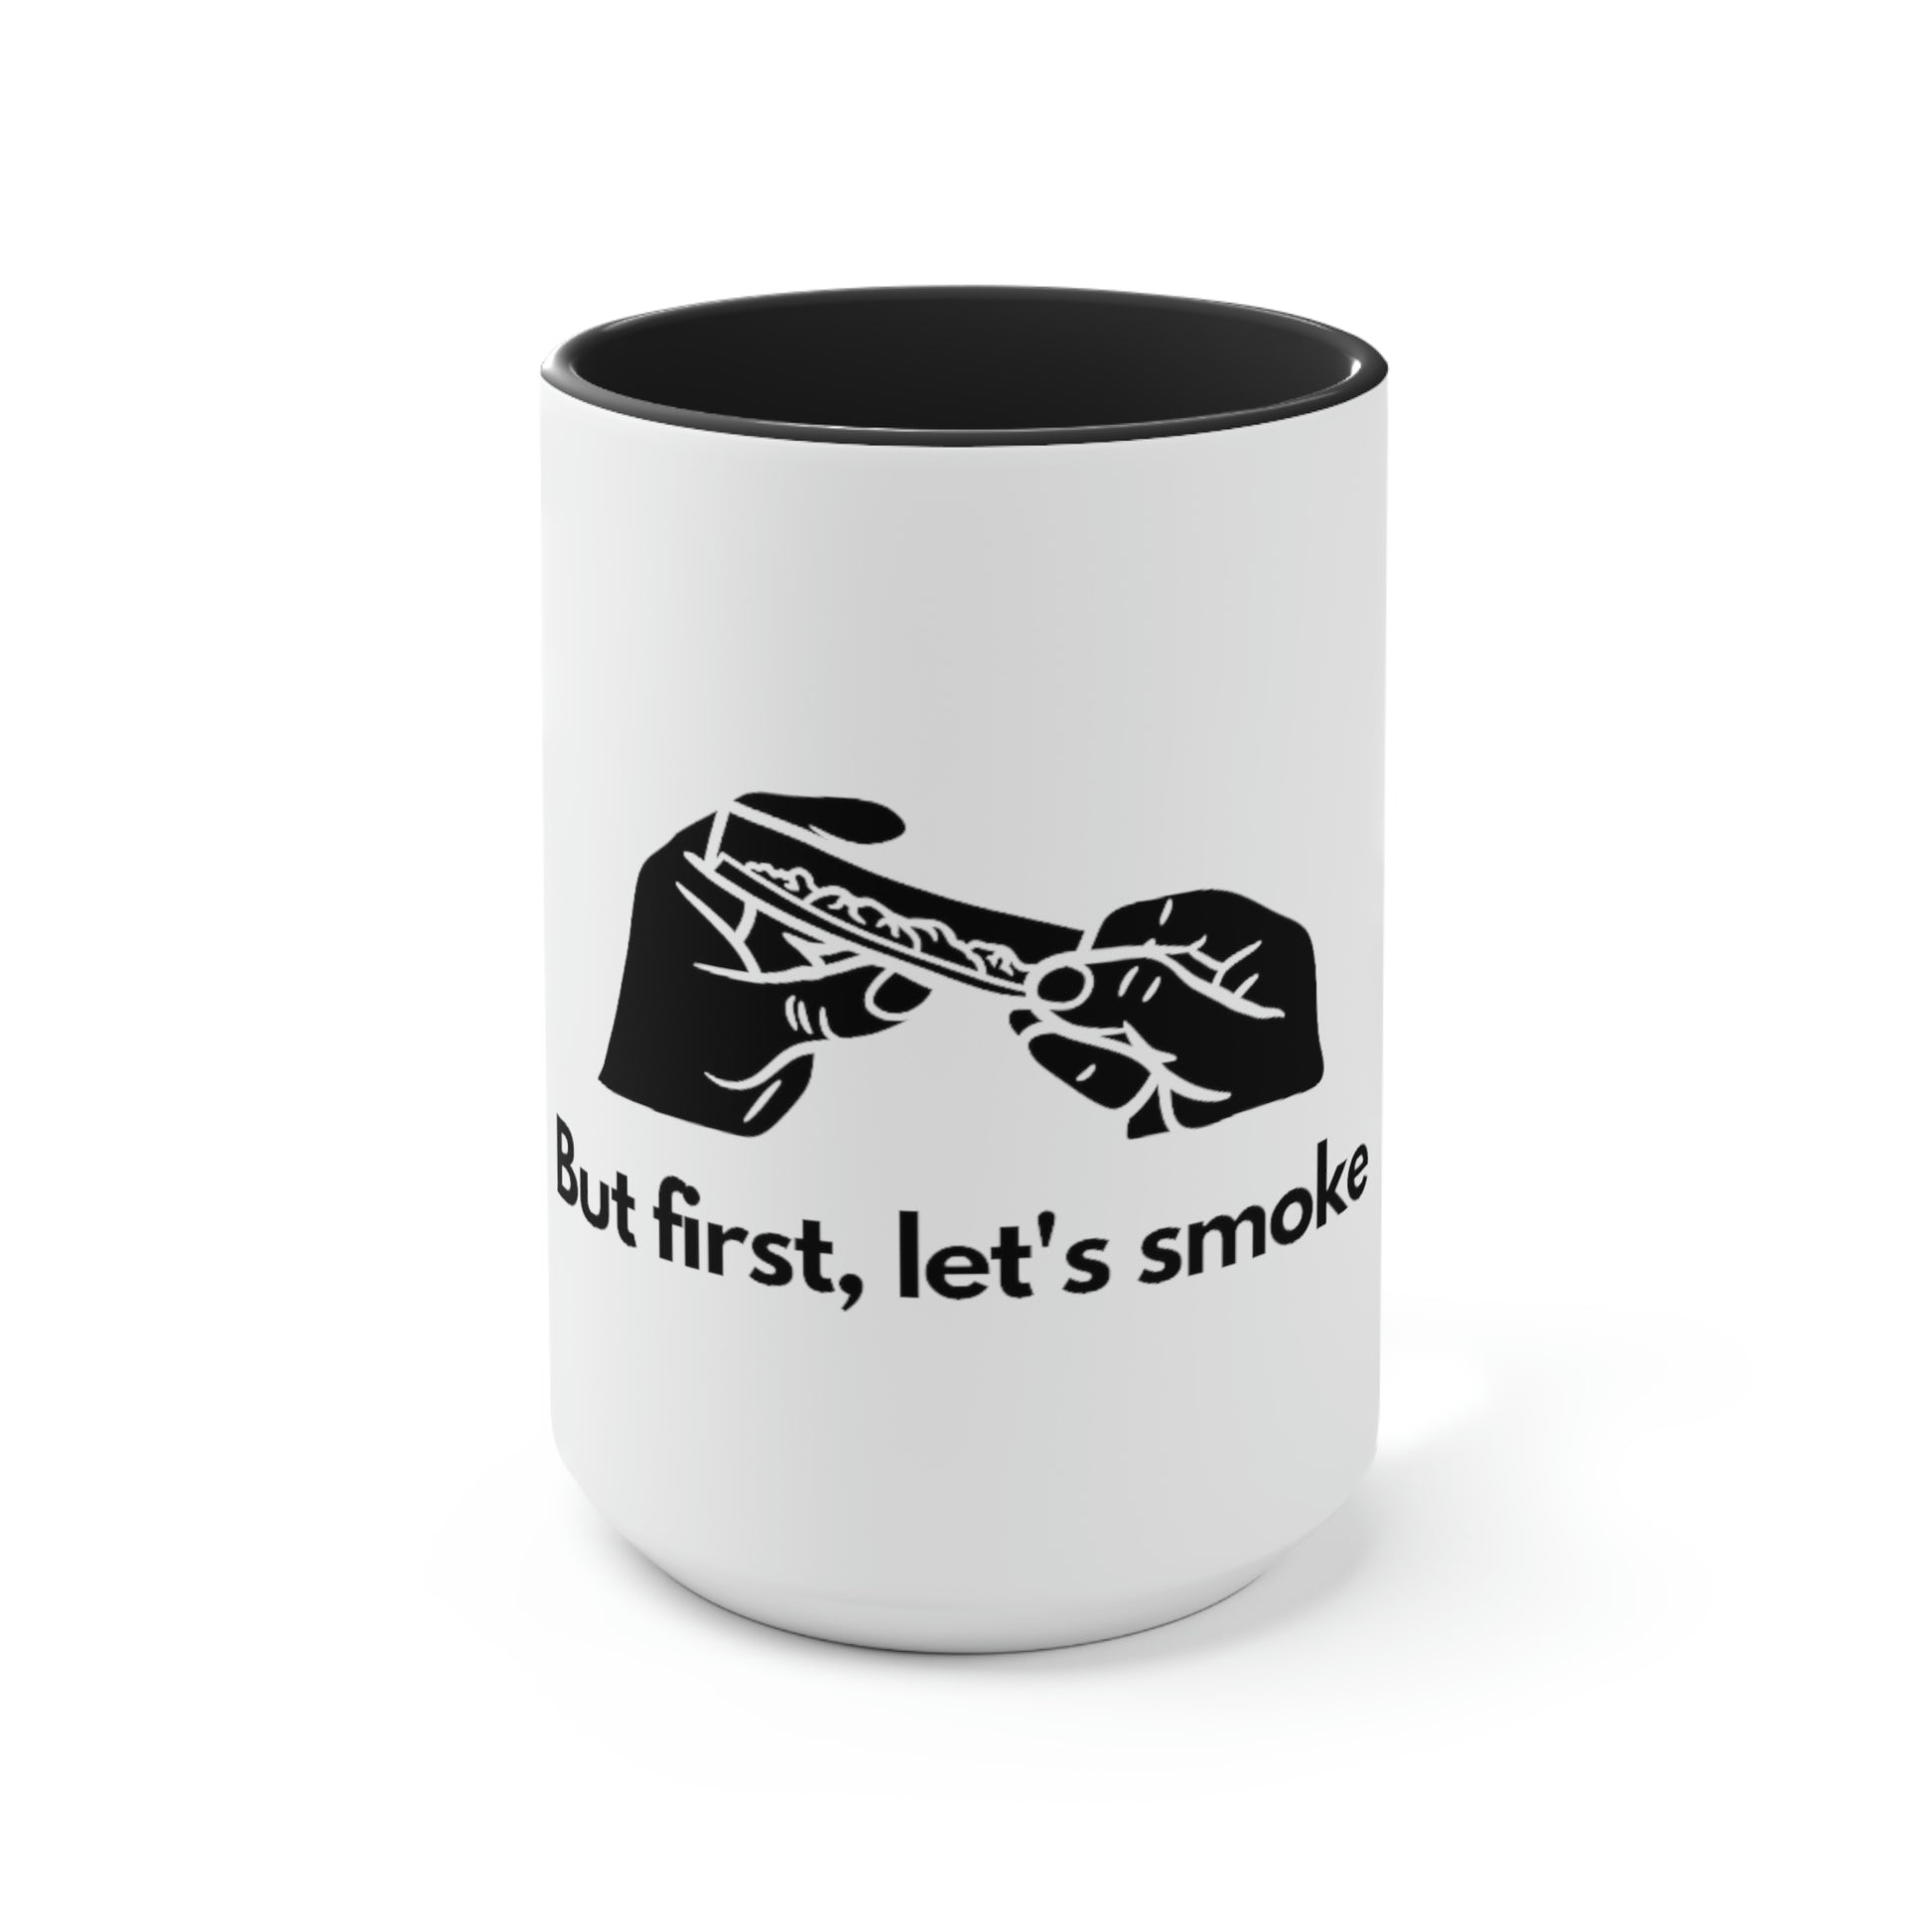 But First, Let's Smoke Coffee Mug.